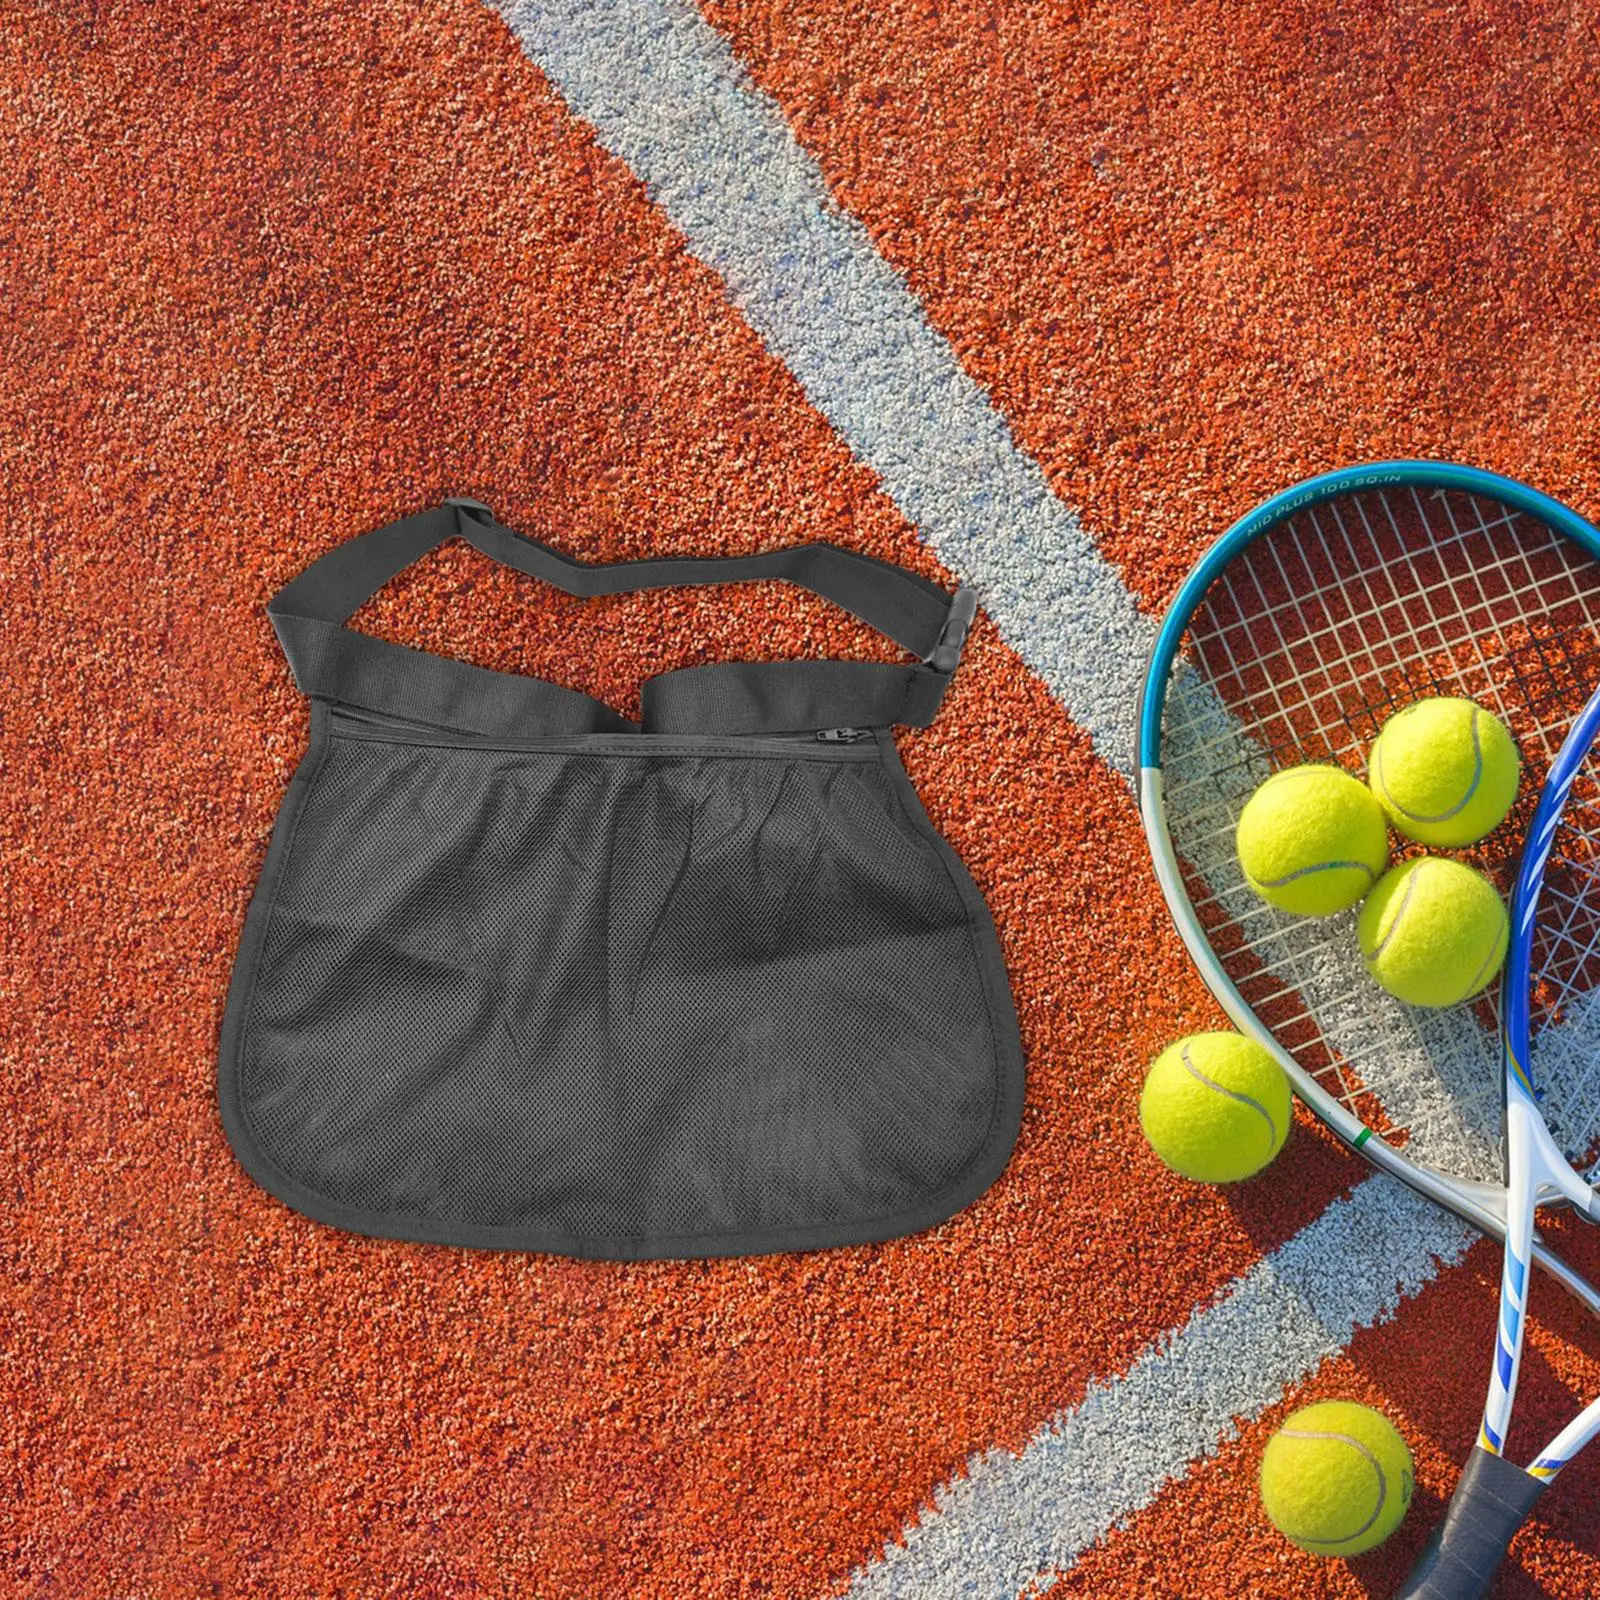 Black Tennis Ball Holder, Mesh Storage Bag Carrier Holding 8 Tennis Balls Golf Balls Fanny Pack for Storing Balls and Phones